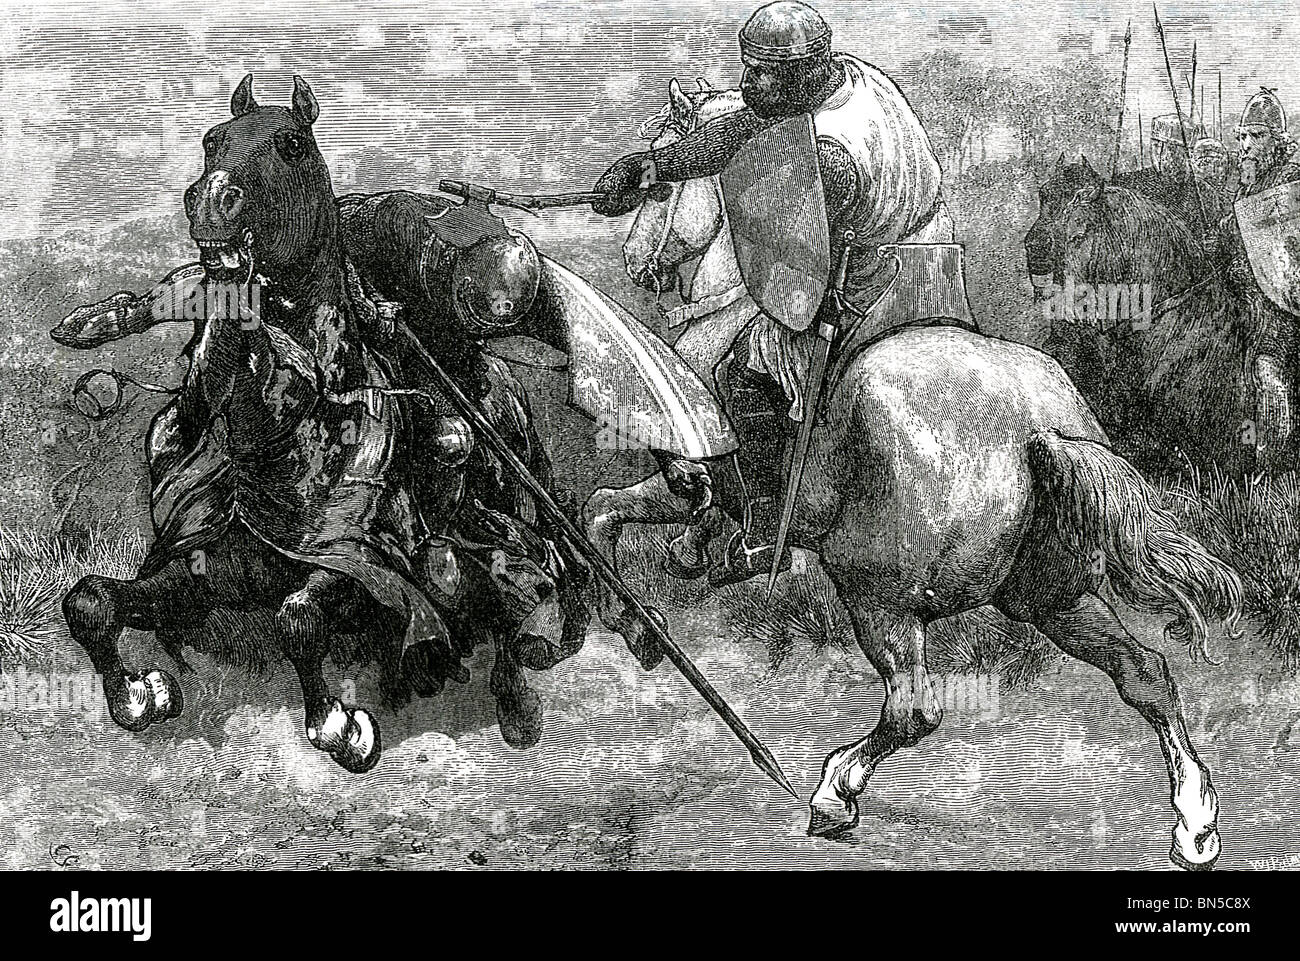 ROBERT THE BRUCE  King of Scotland kills an English knight at the Battle of Bannockburn 24 June 1314 Stock Photo